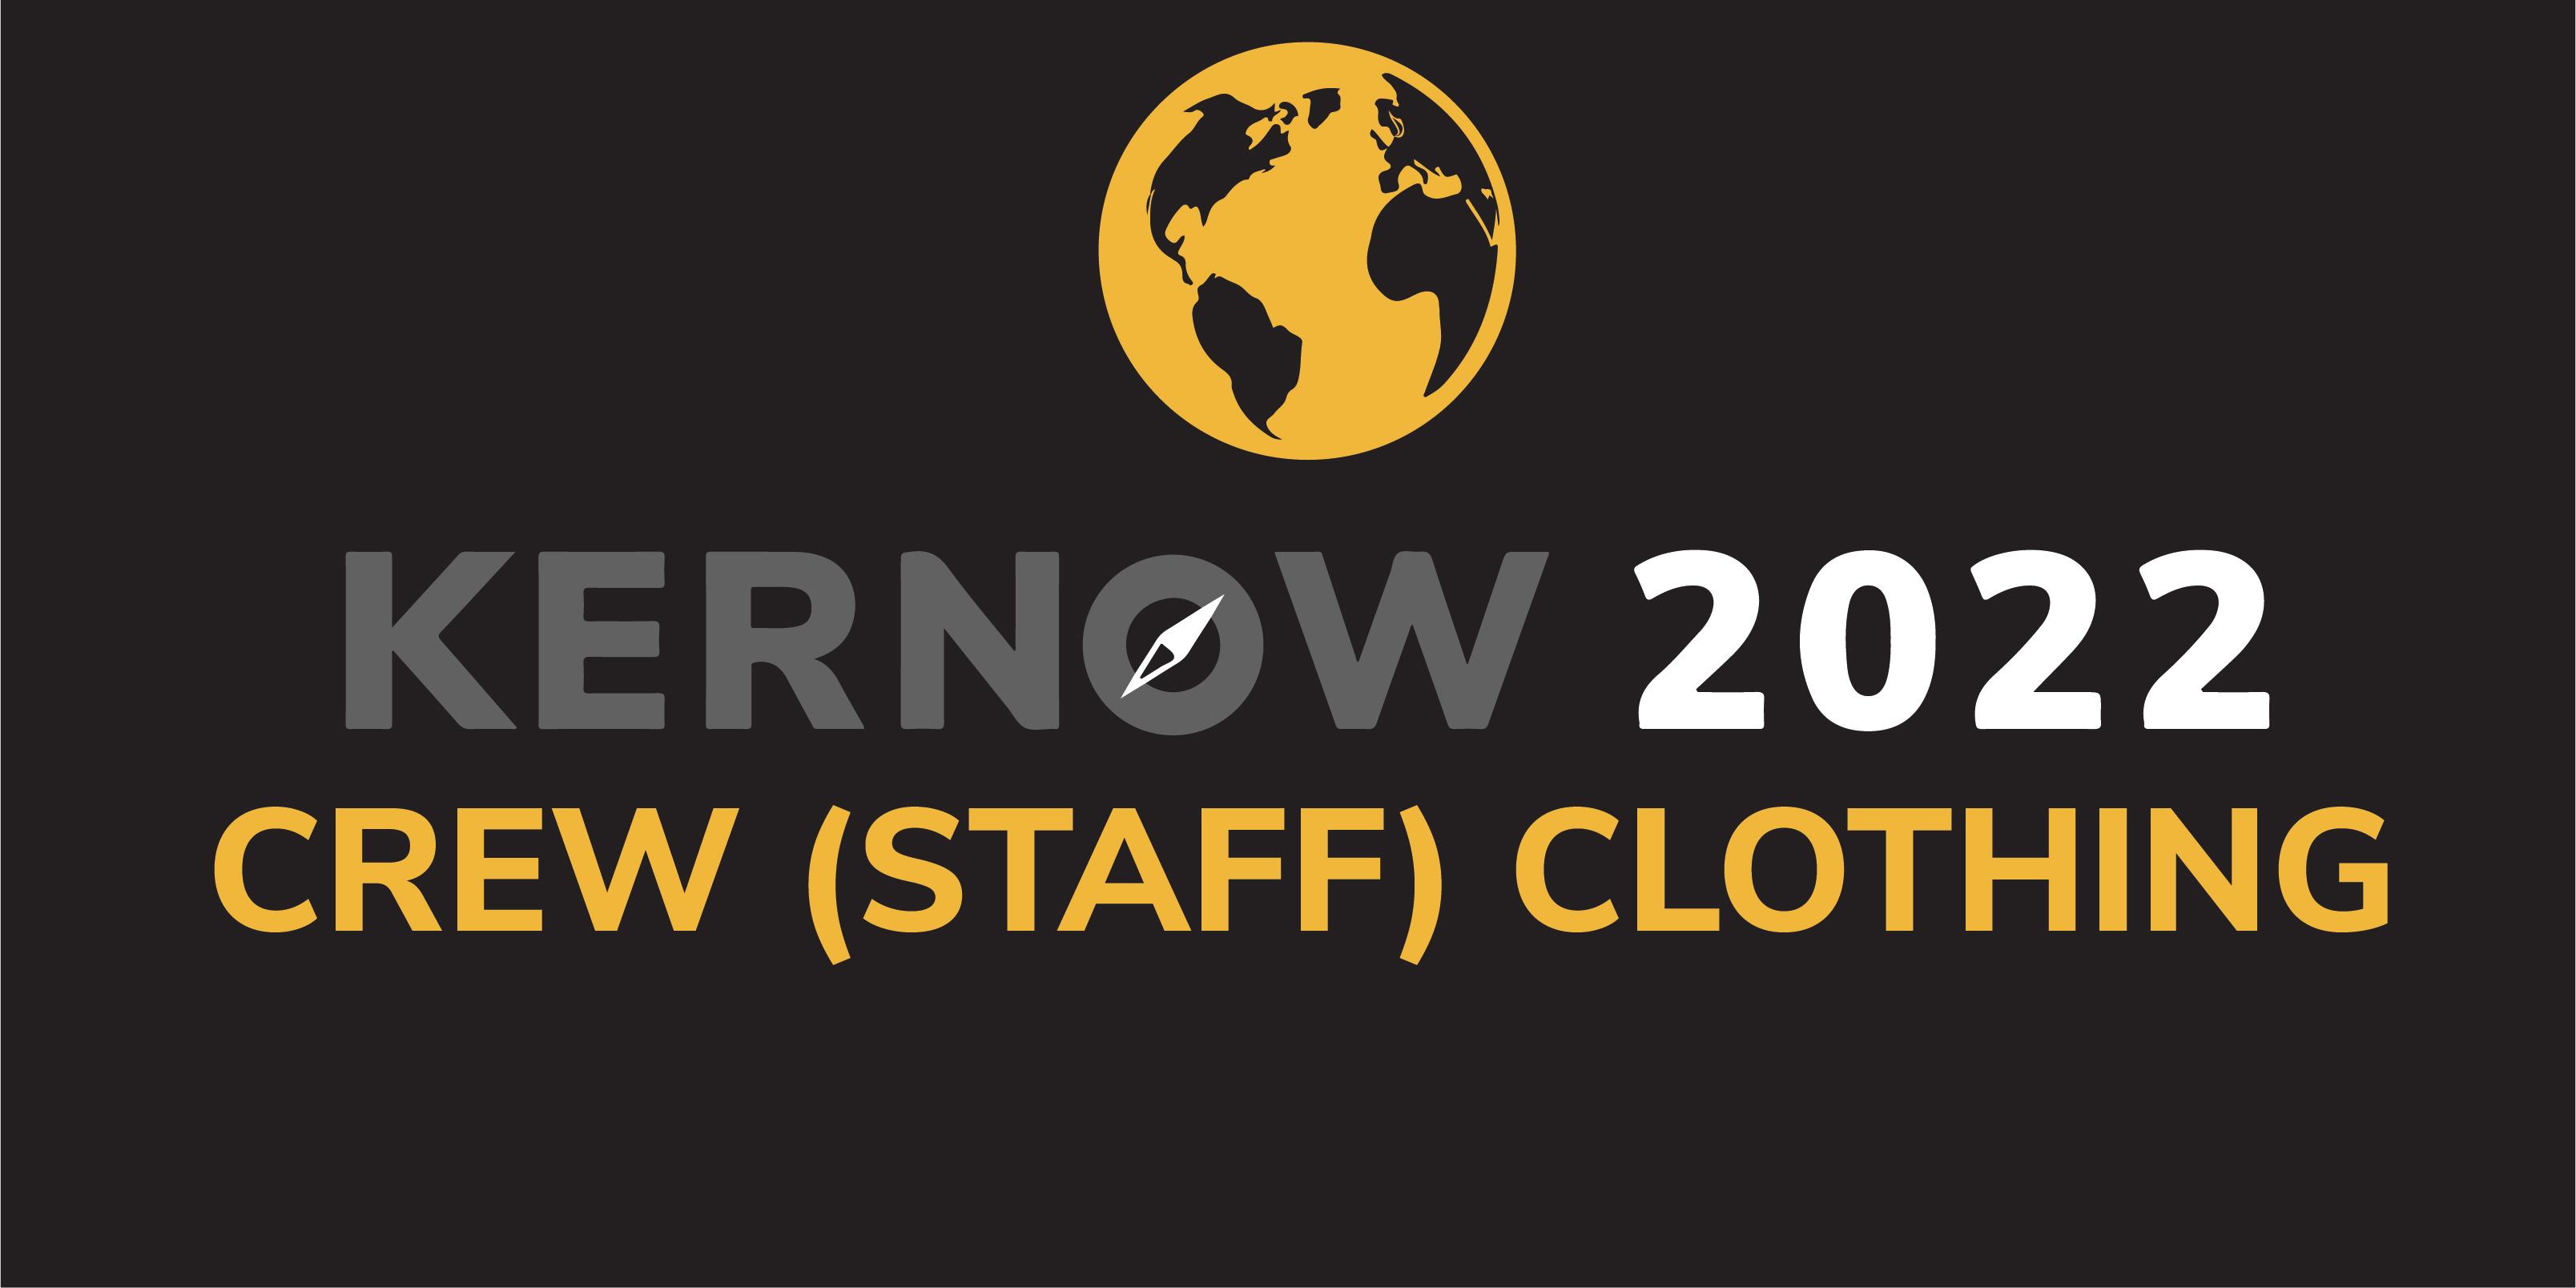 Kernow Crew Clothing (Staff)